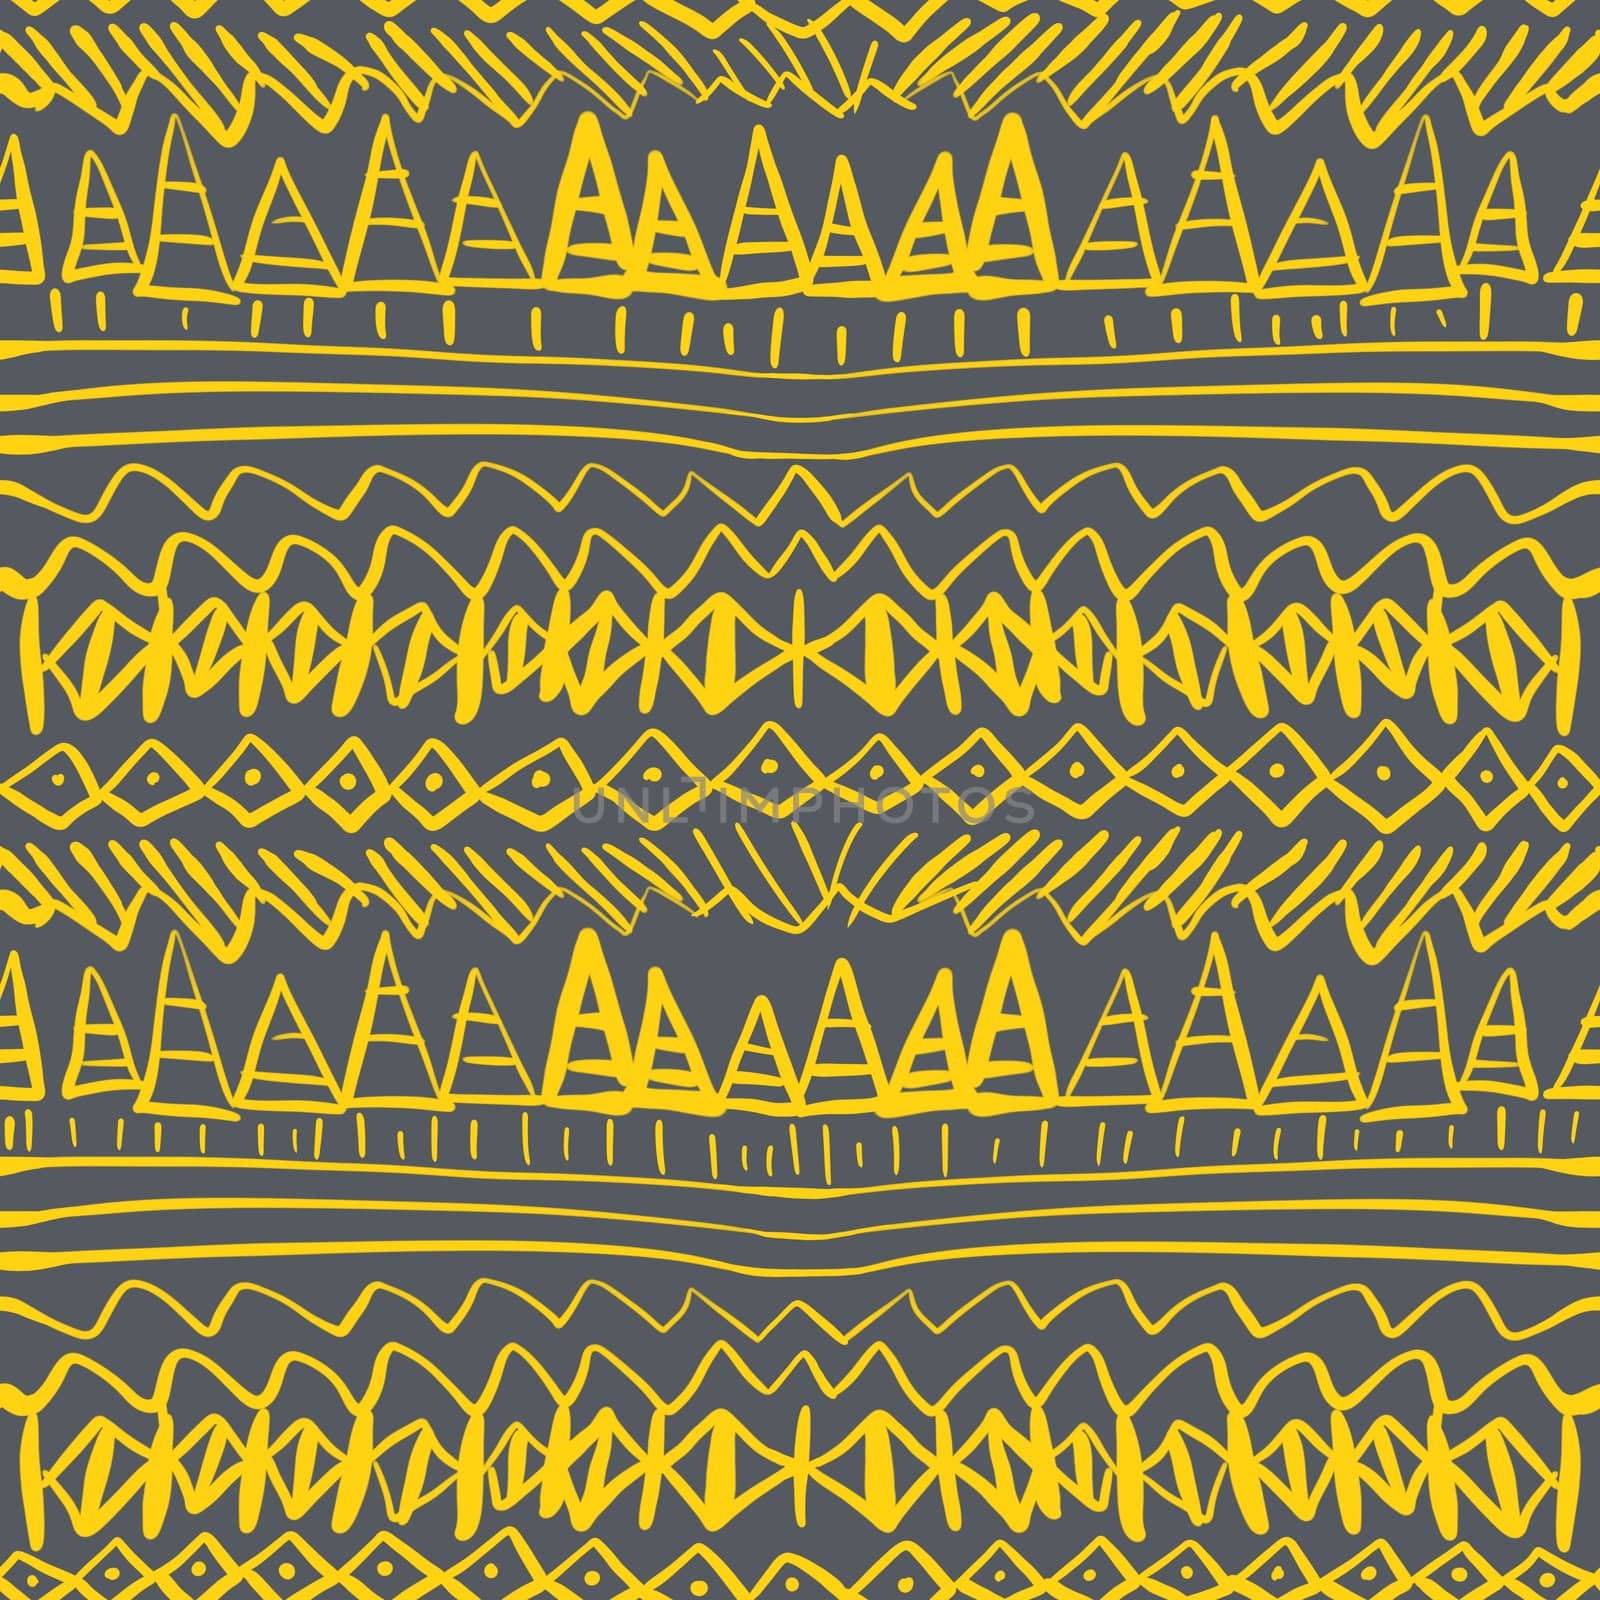 Yellow aztec symbols pattern. Yellow seamless ethnic and tribal pattern on black background. by Nata_Prando